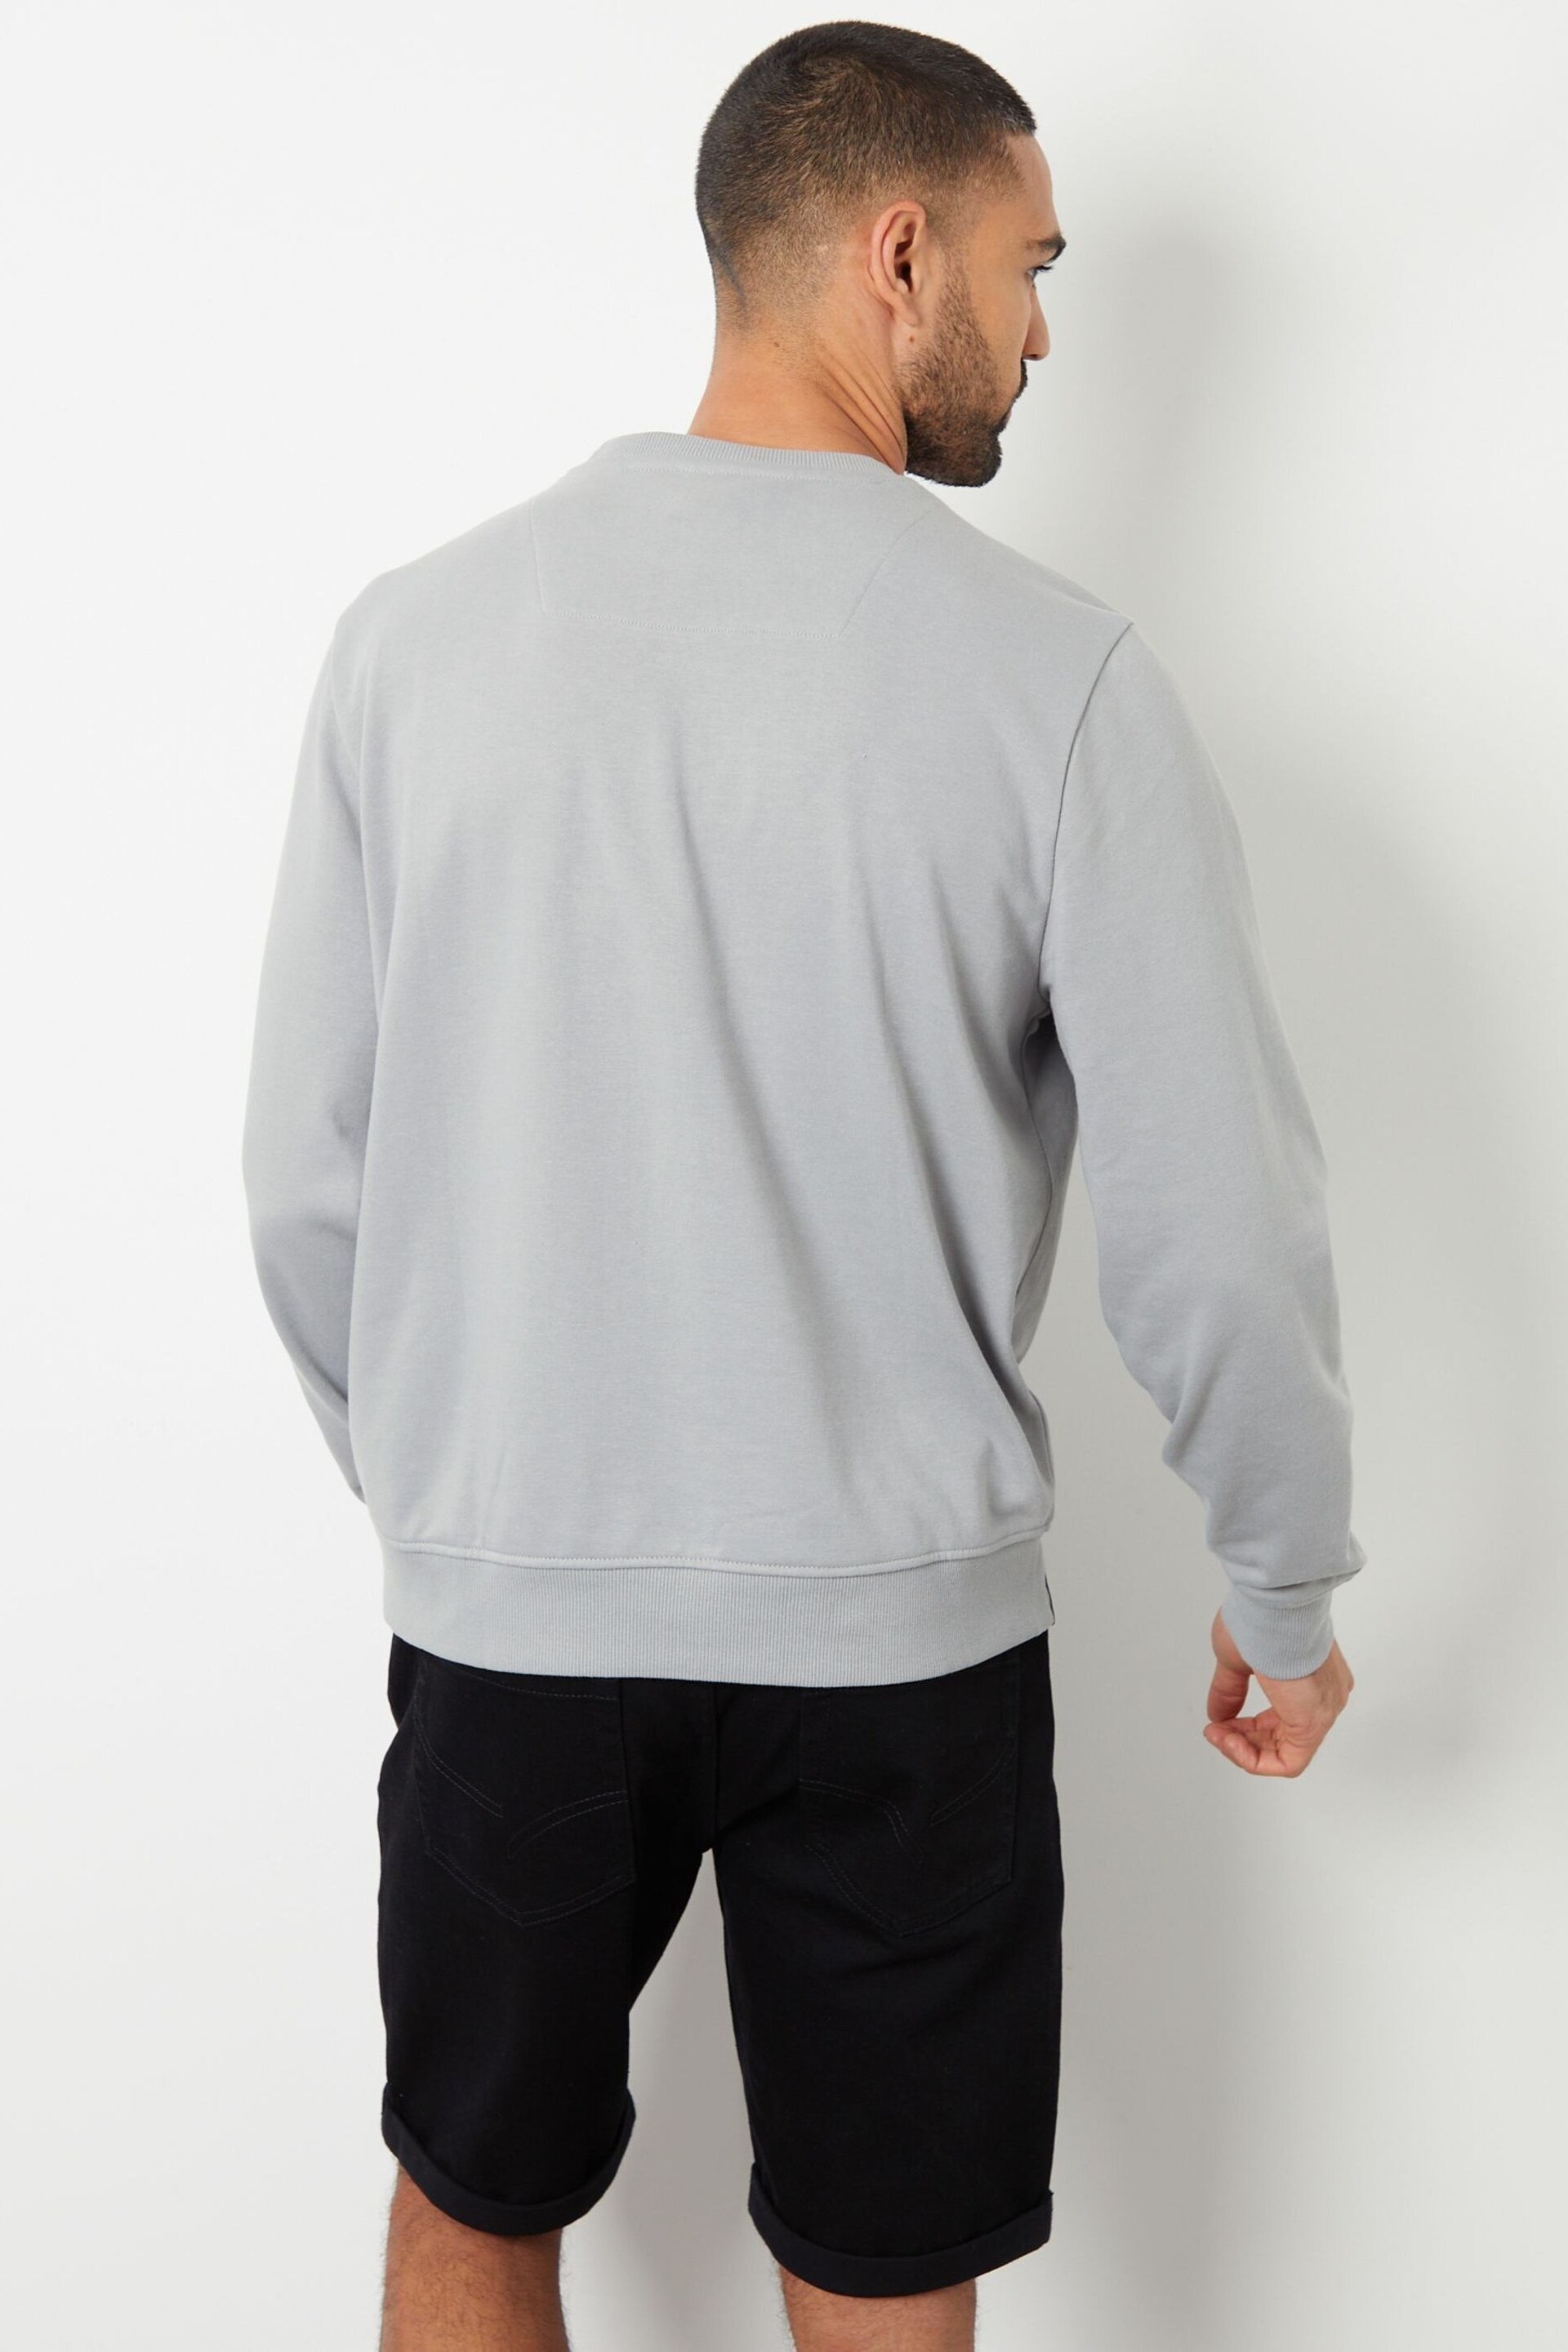 Threadbare Grey Crew Neck Sweatshirt with Pocket - Image 2 of 4